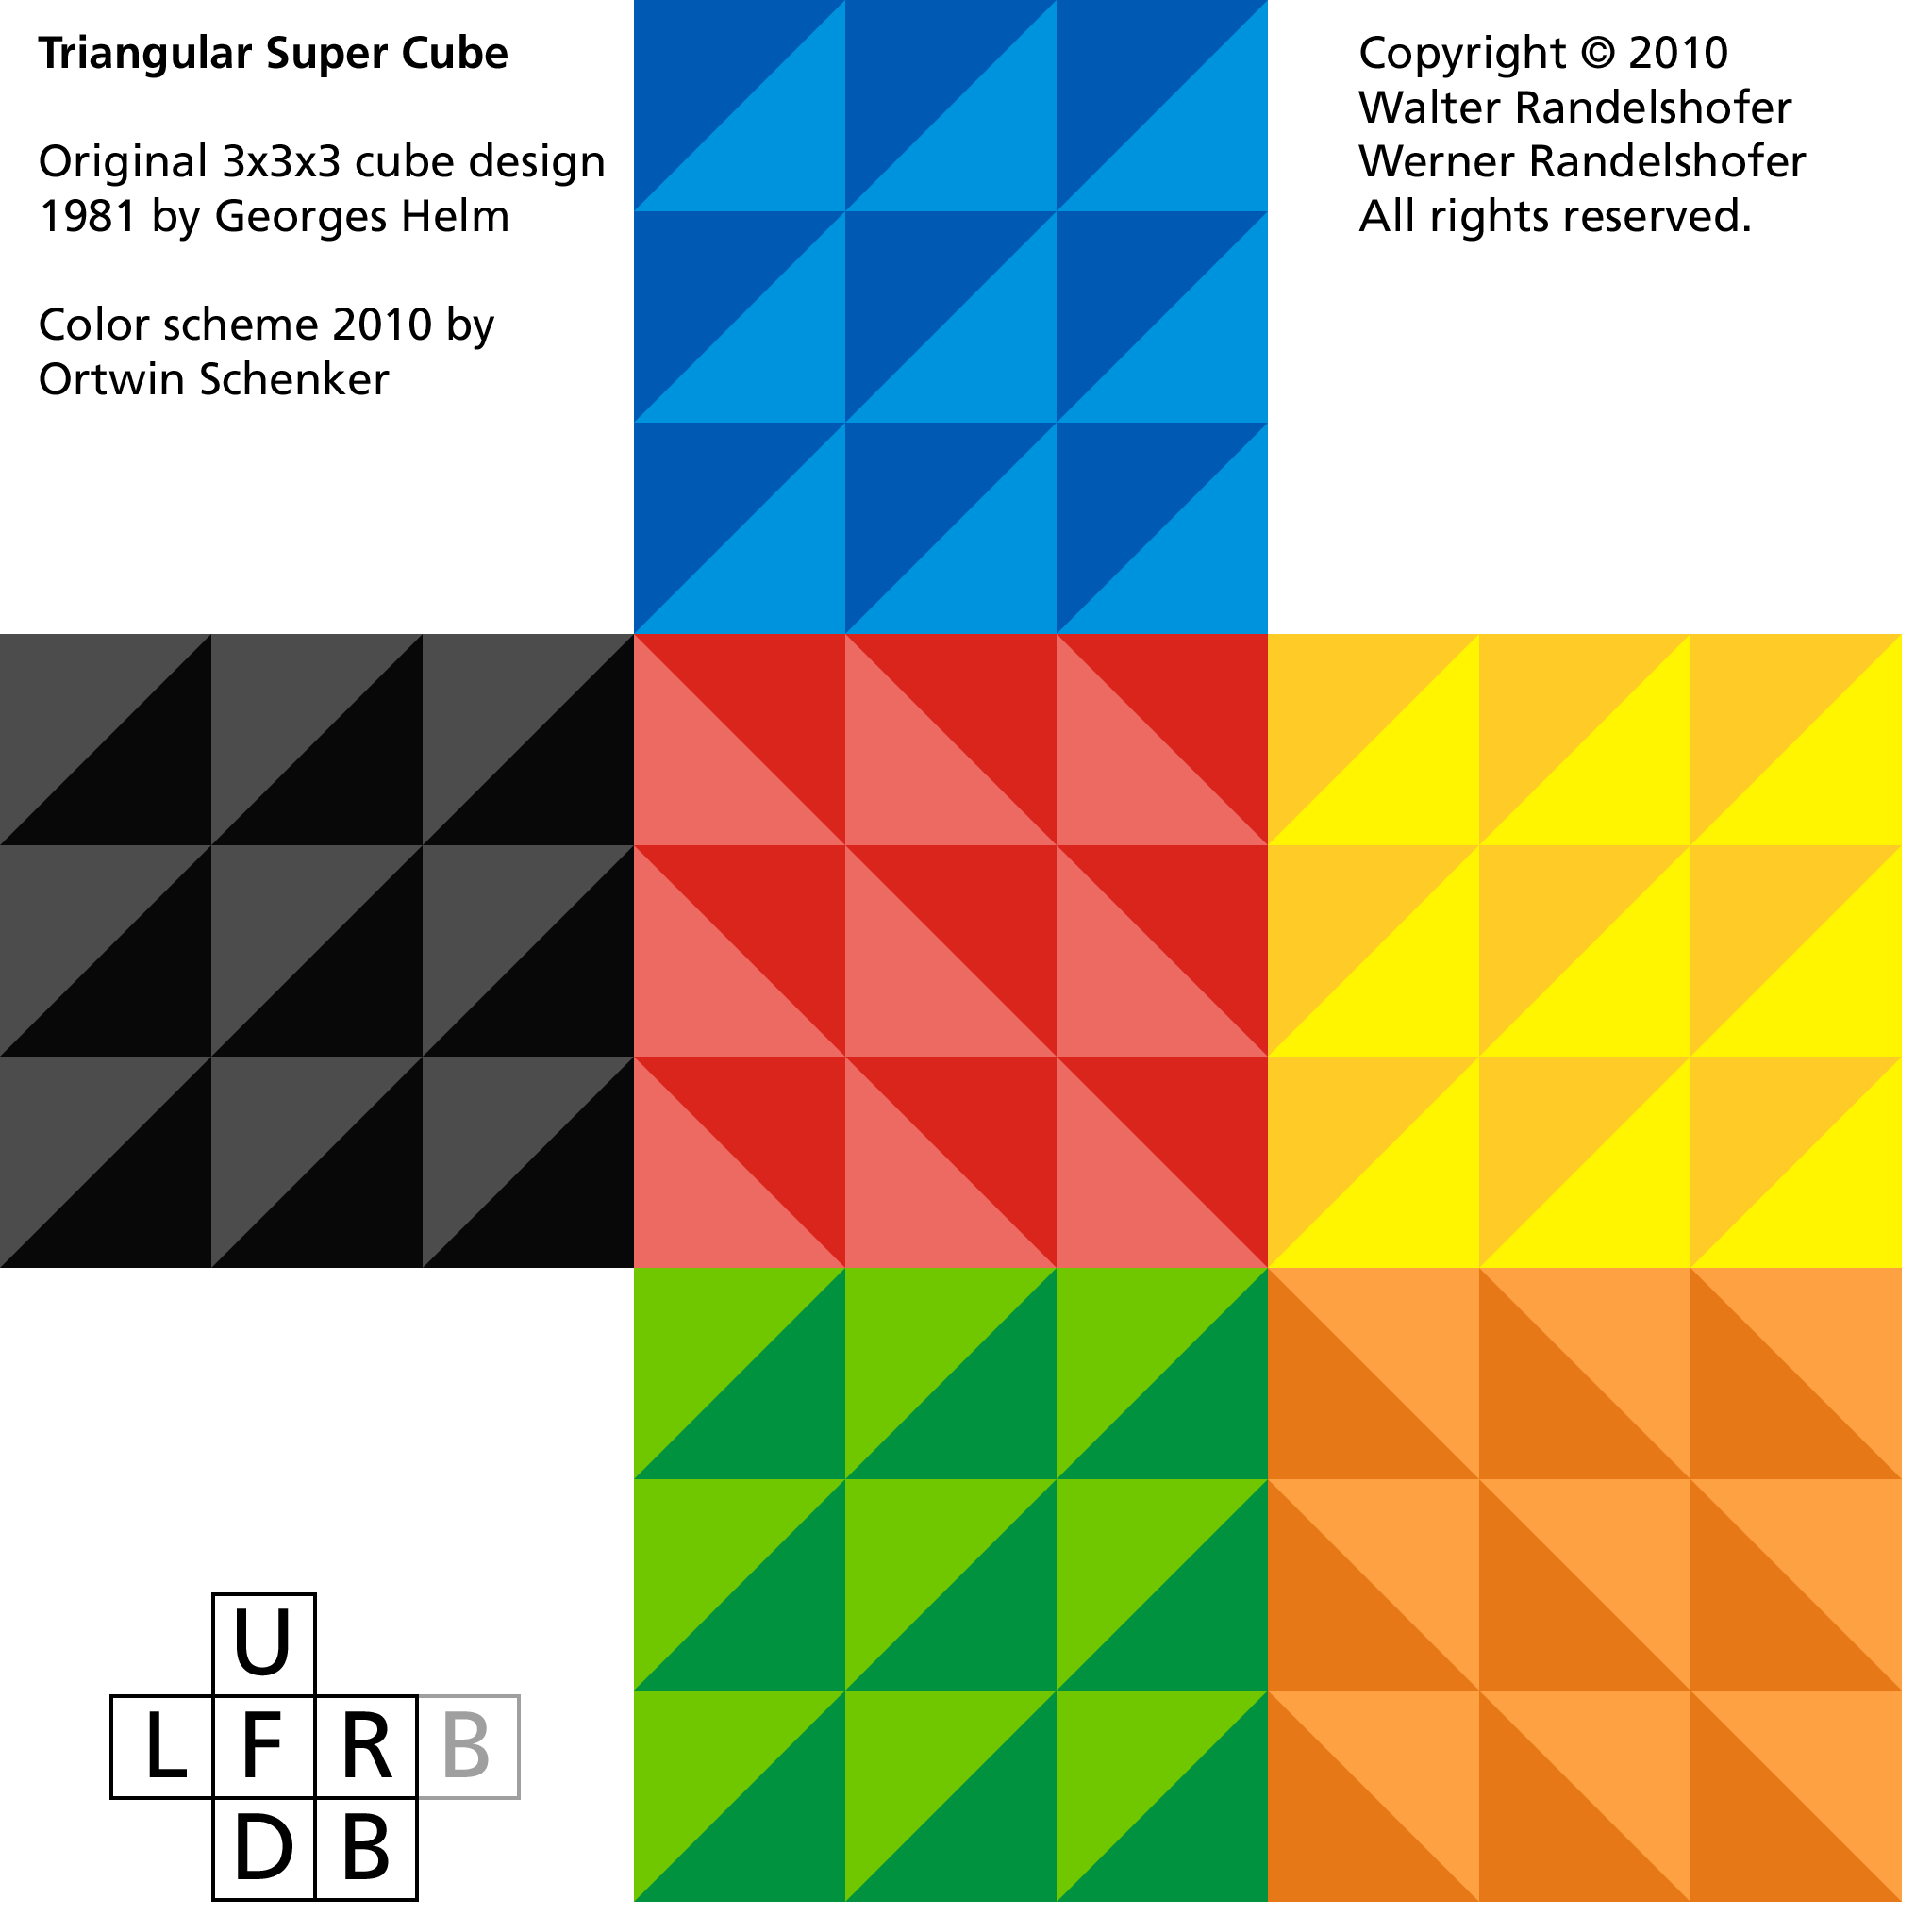 http://www.randelshofer.ch/rubik/virtualcubes/rubik/super_cubes/images/TriangularSuperCubeW_2048.gif